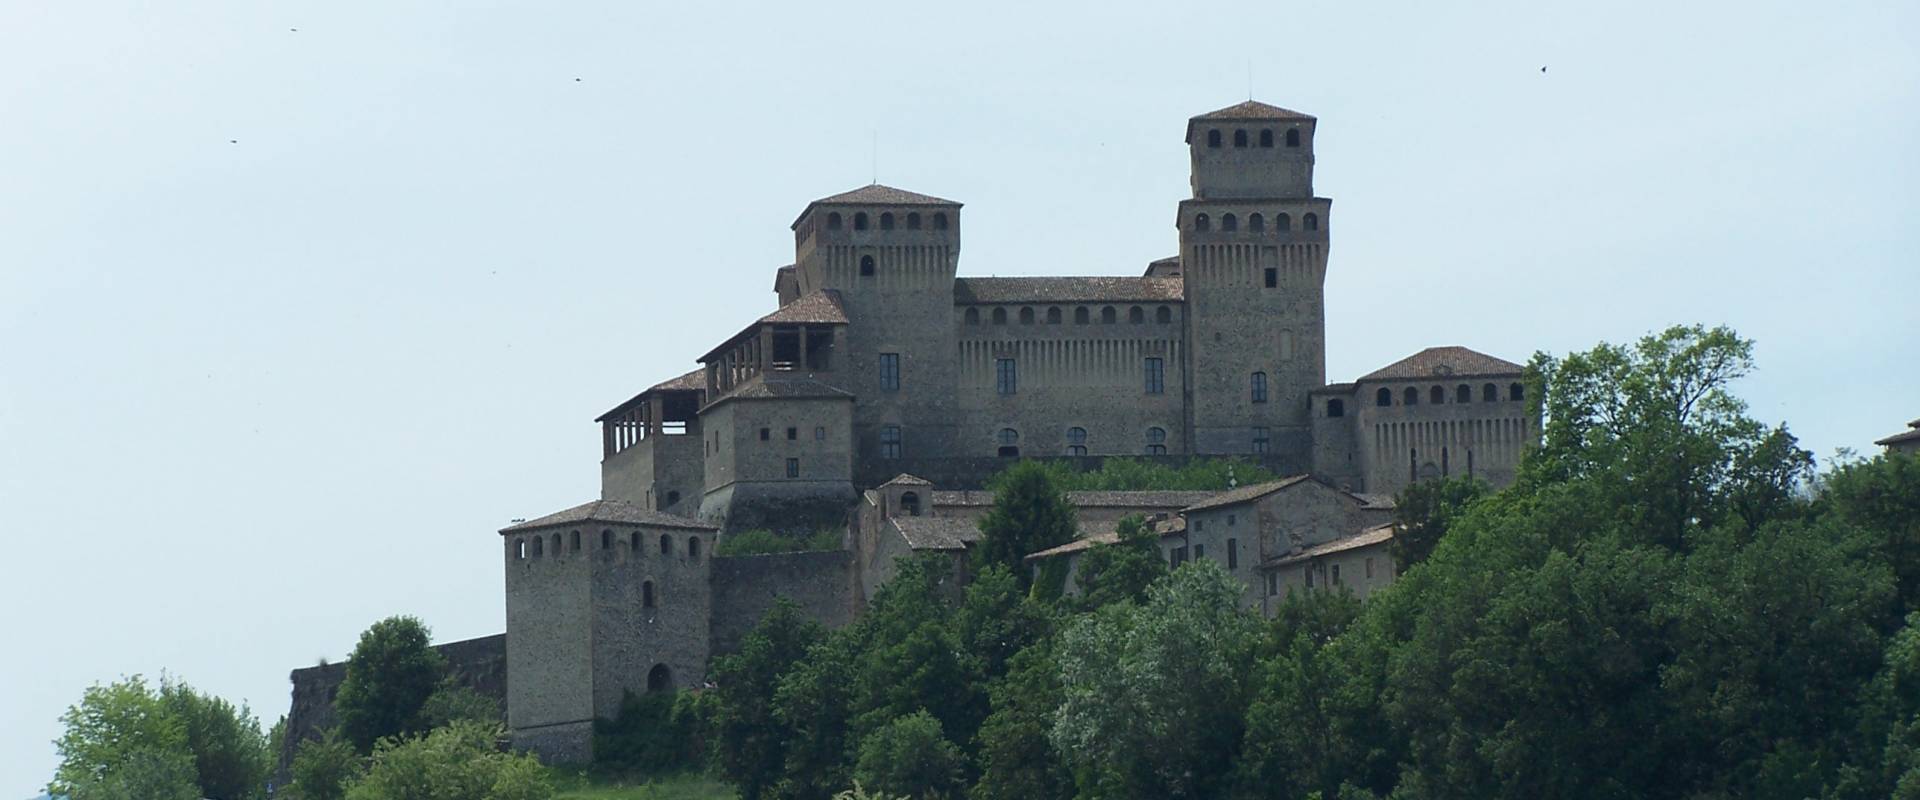 Castello di Torrechiara photo by Le.laura